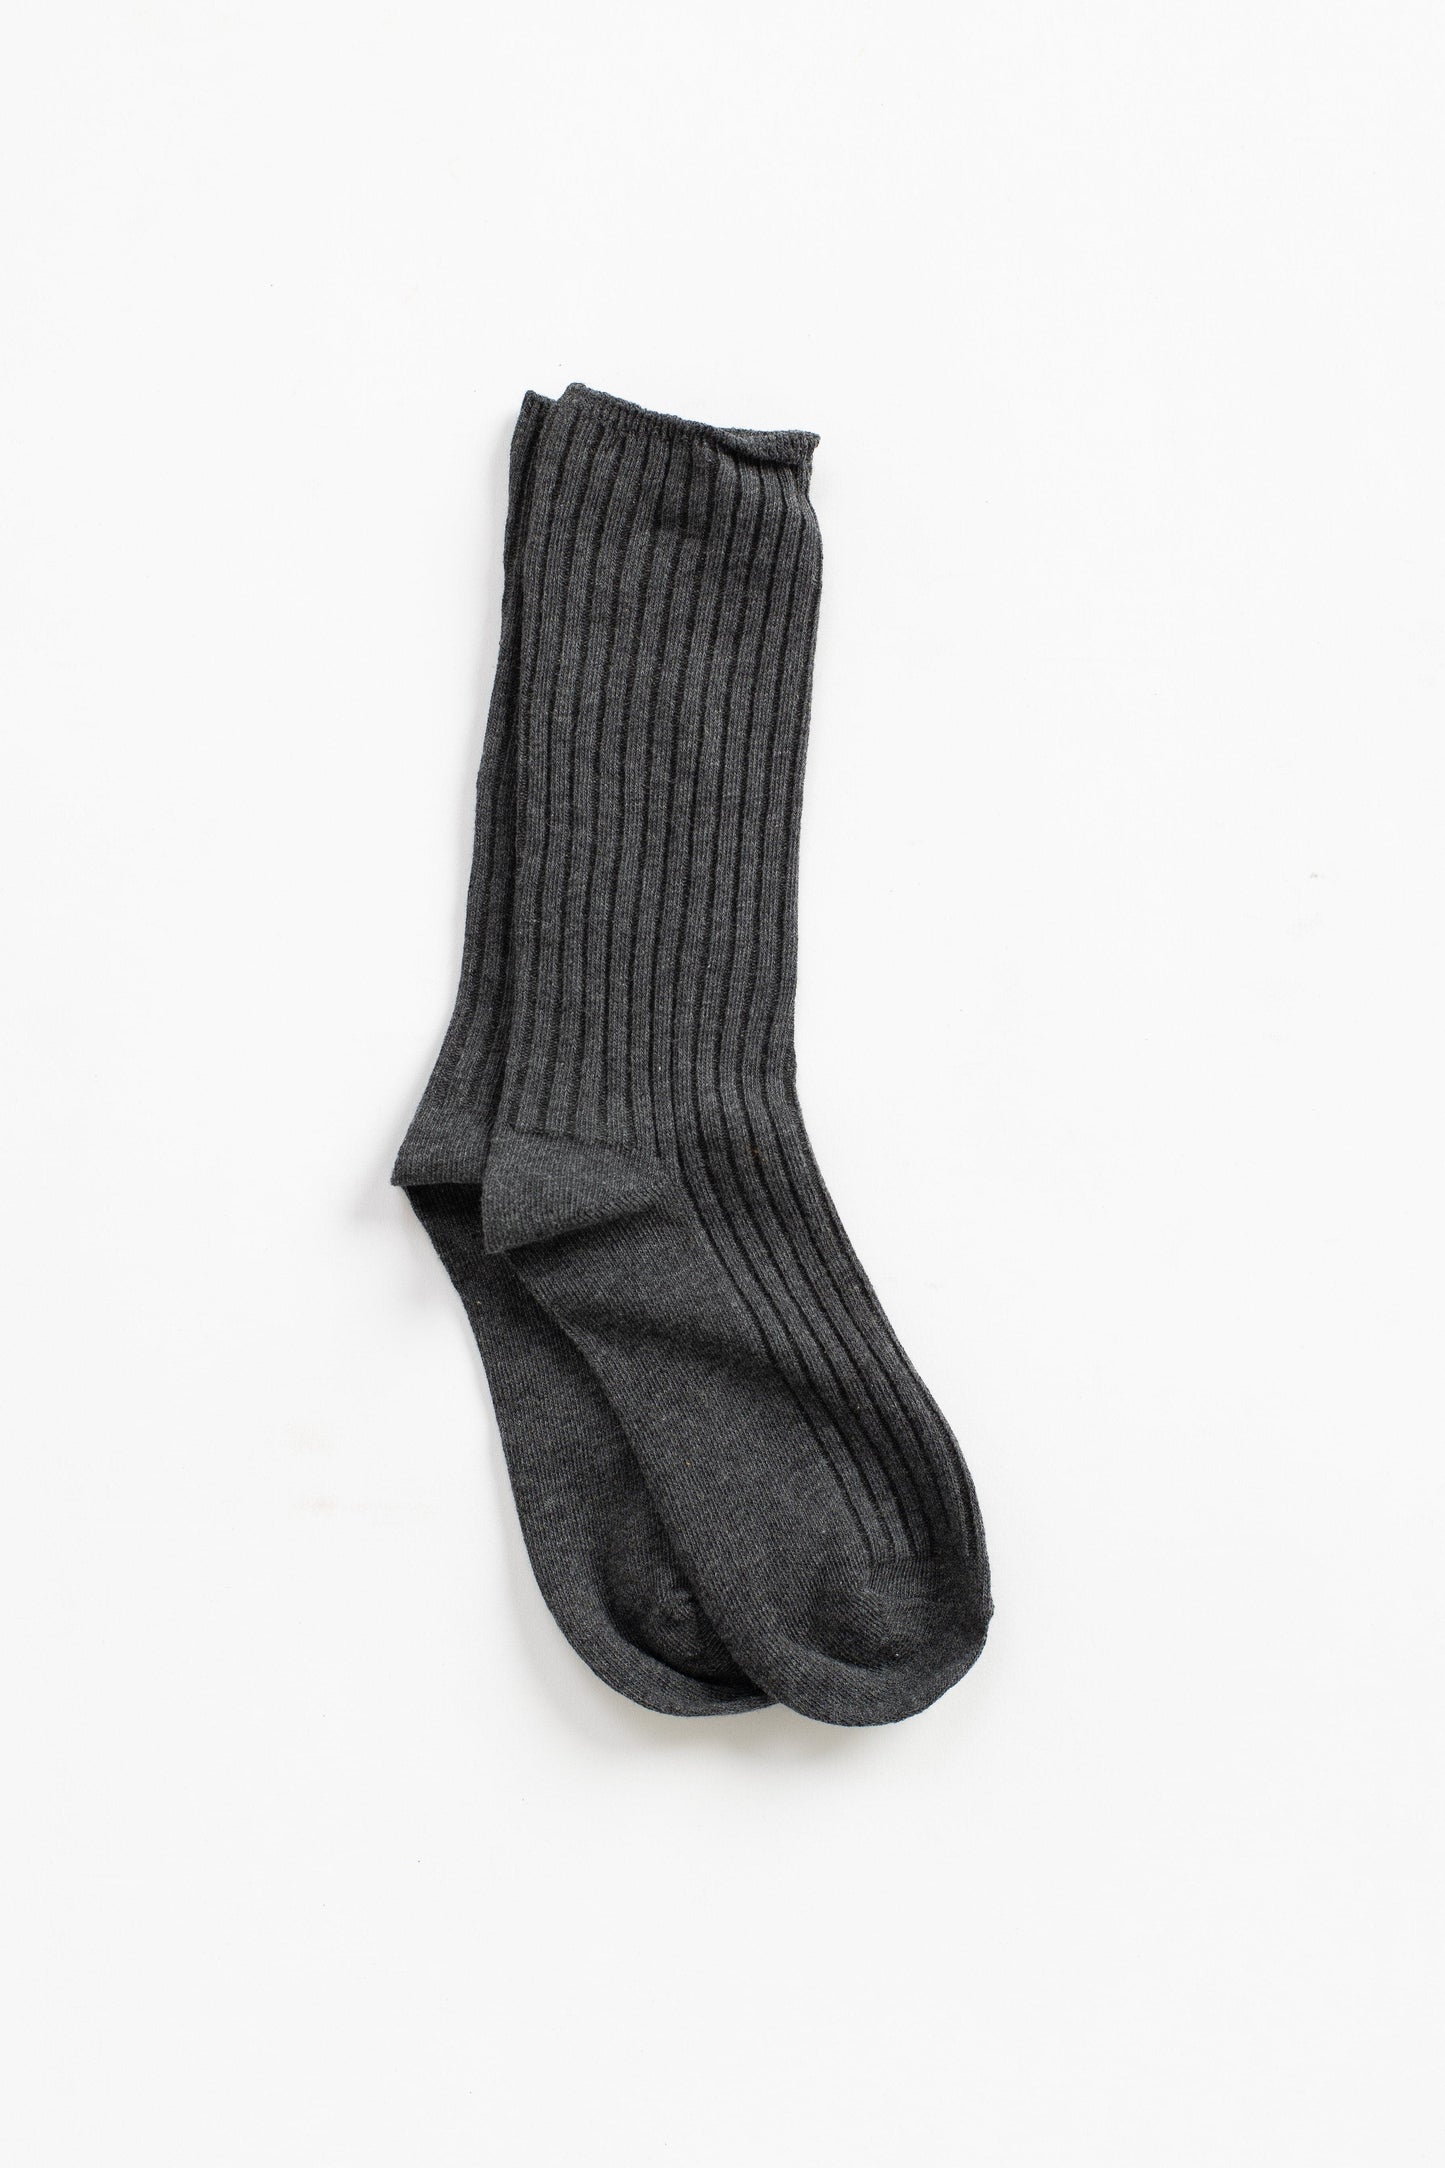 Sandhill Ribbed Socks WOMEN'S SOCKS Ali Express Charcoal OS 